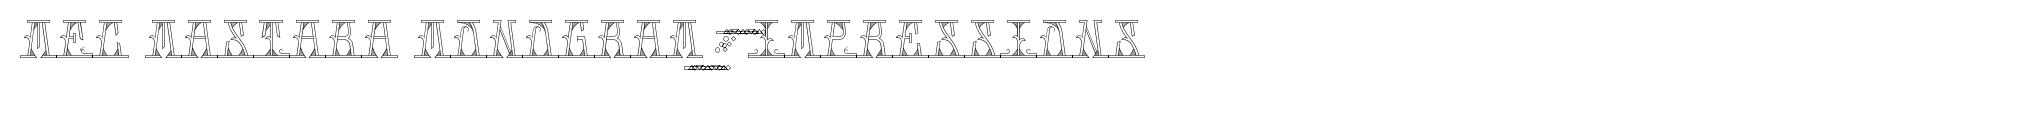 MFC Mastaba Monogram 250 Impressions image